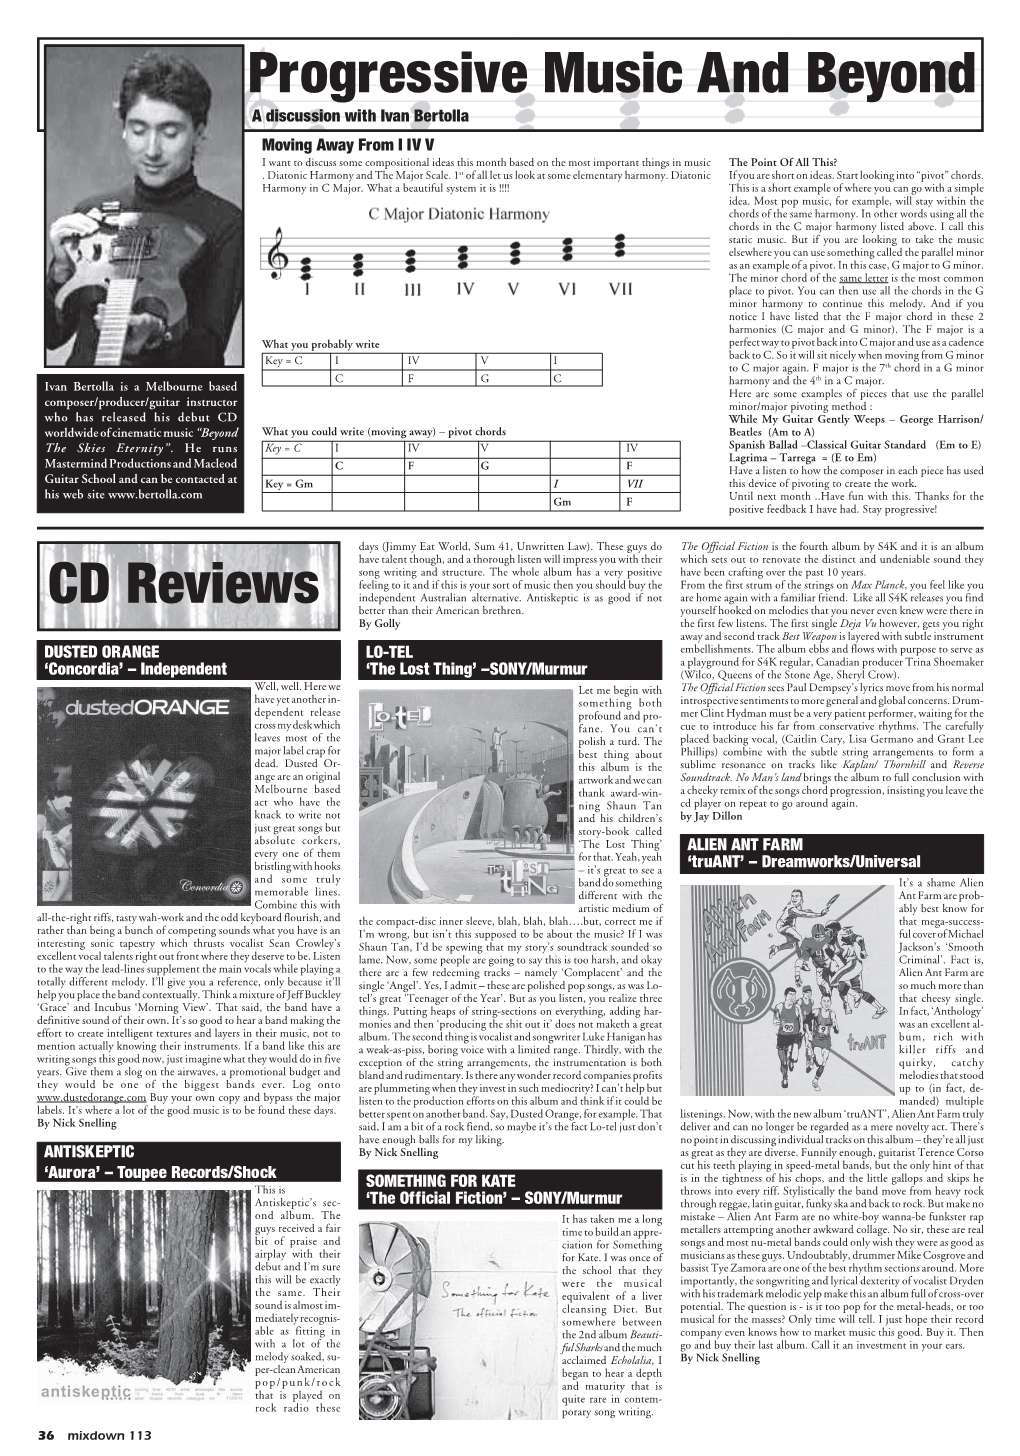 Progressive Music and Beyond CD Reviews